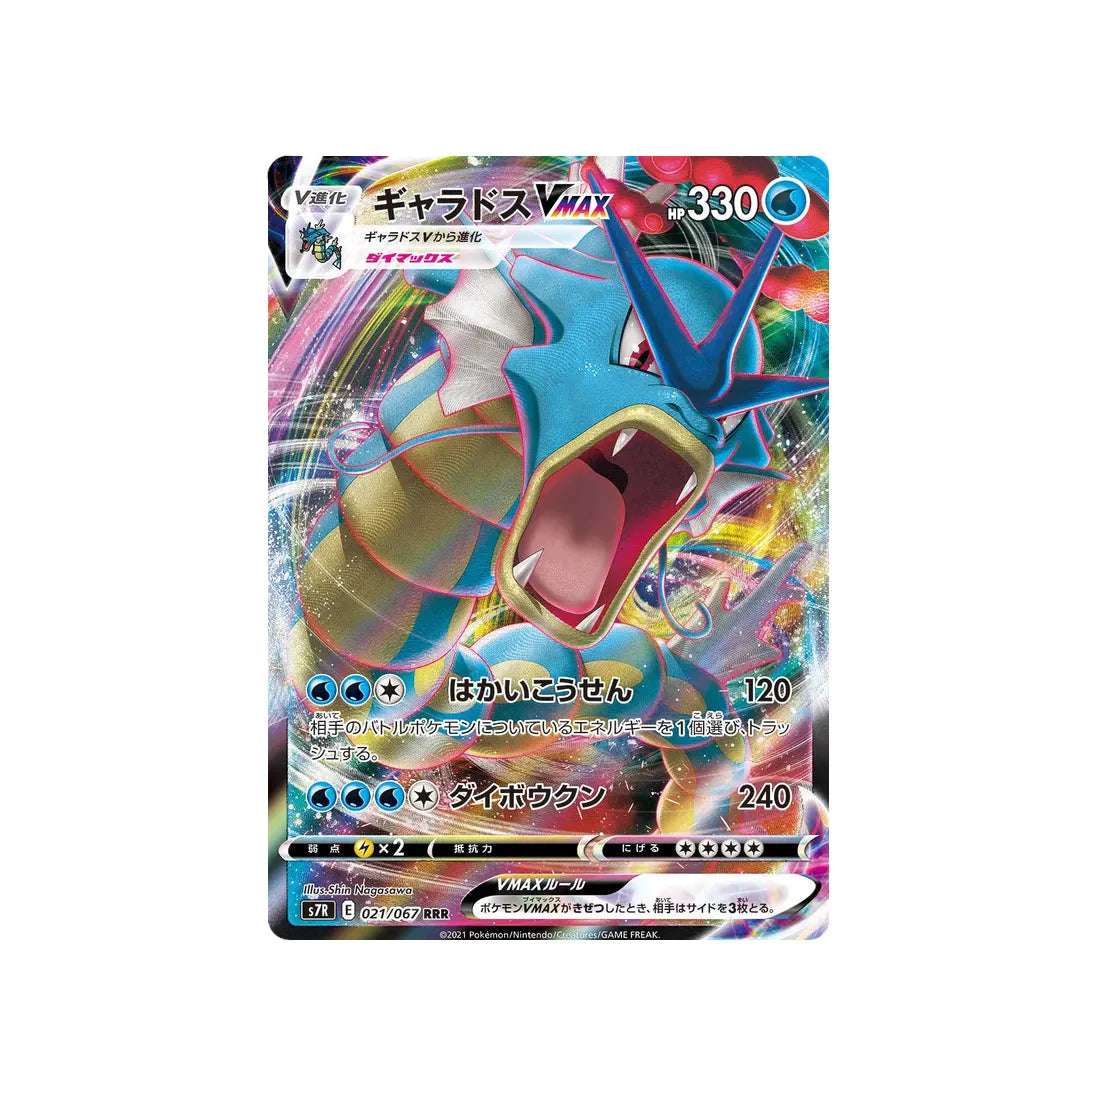 Pokémon-Karte Garados Vmax S7R 021/067 